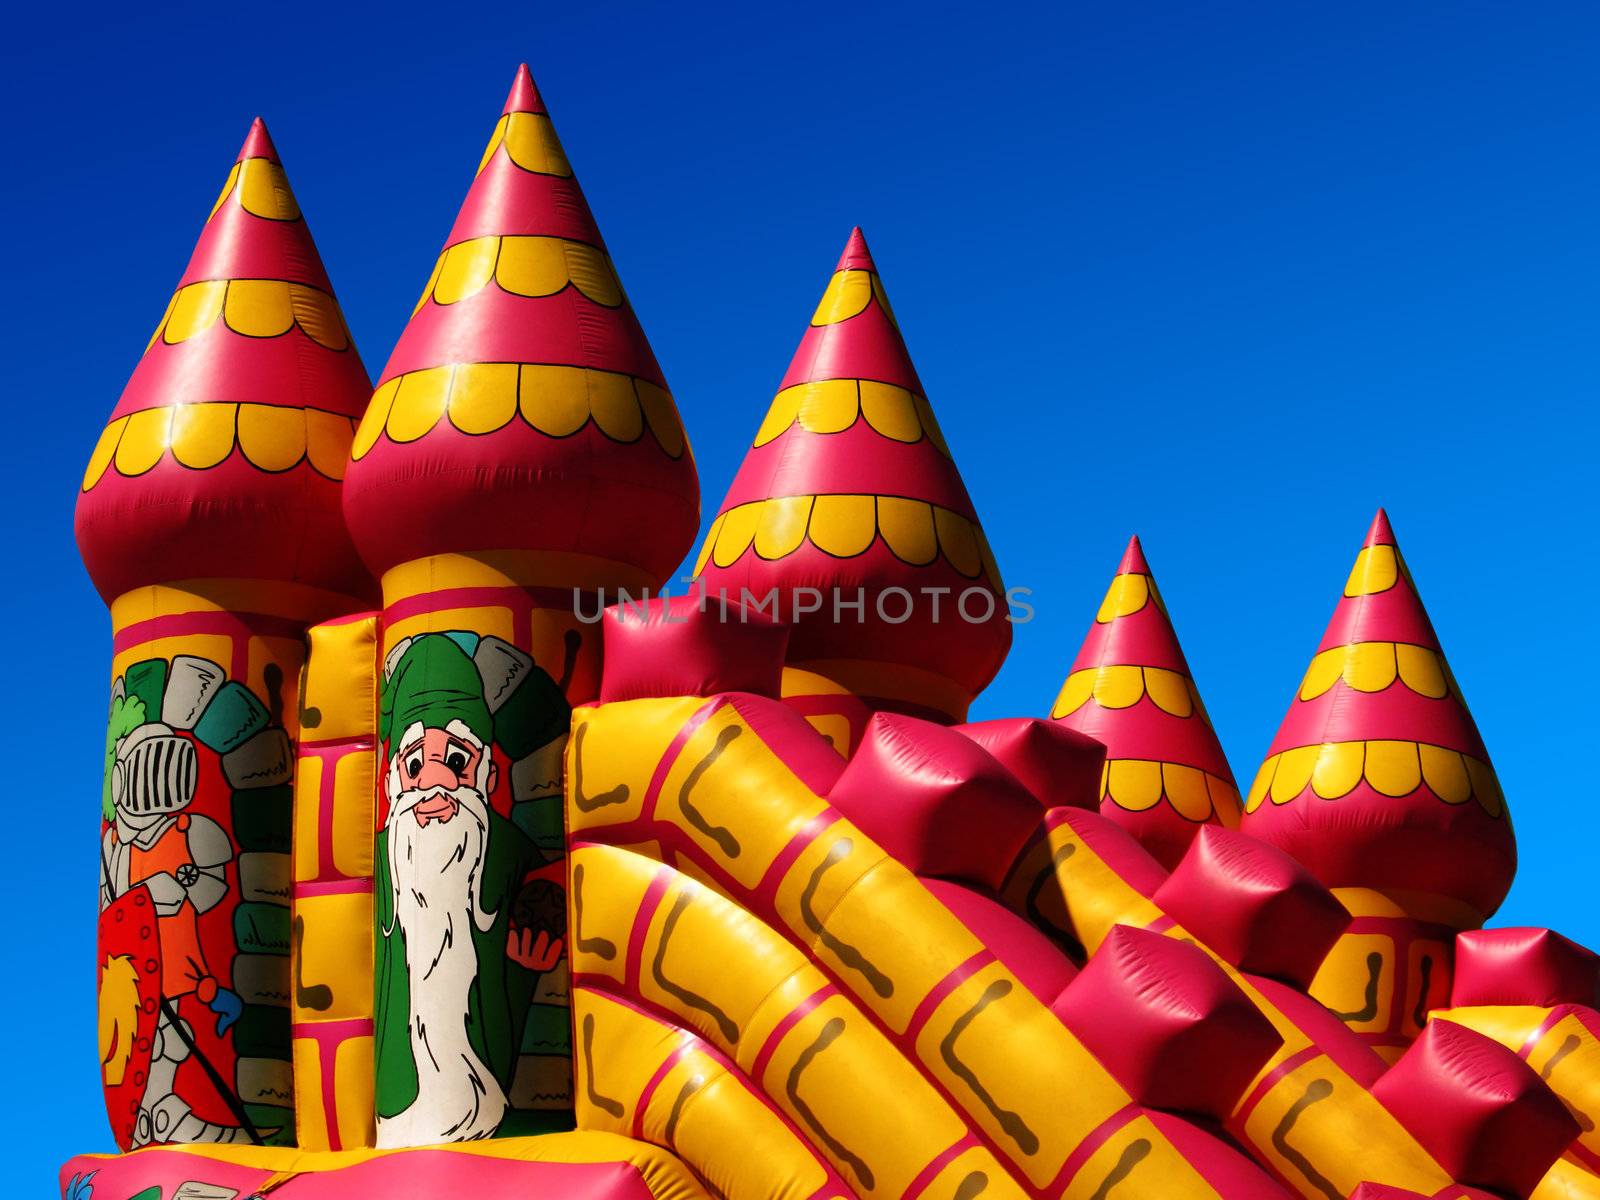 Children's bouncy castle detail, against a summer's clear deep blue sky